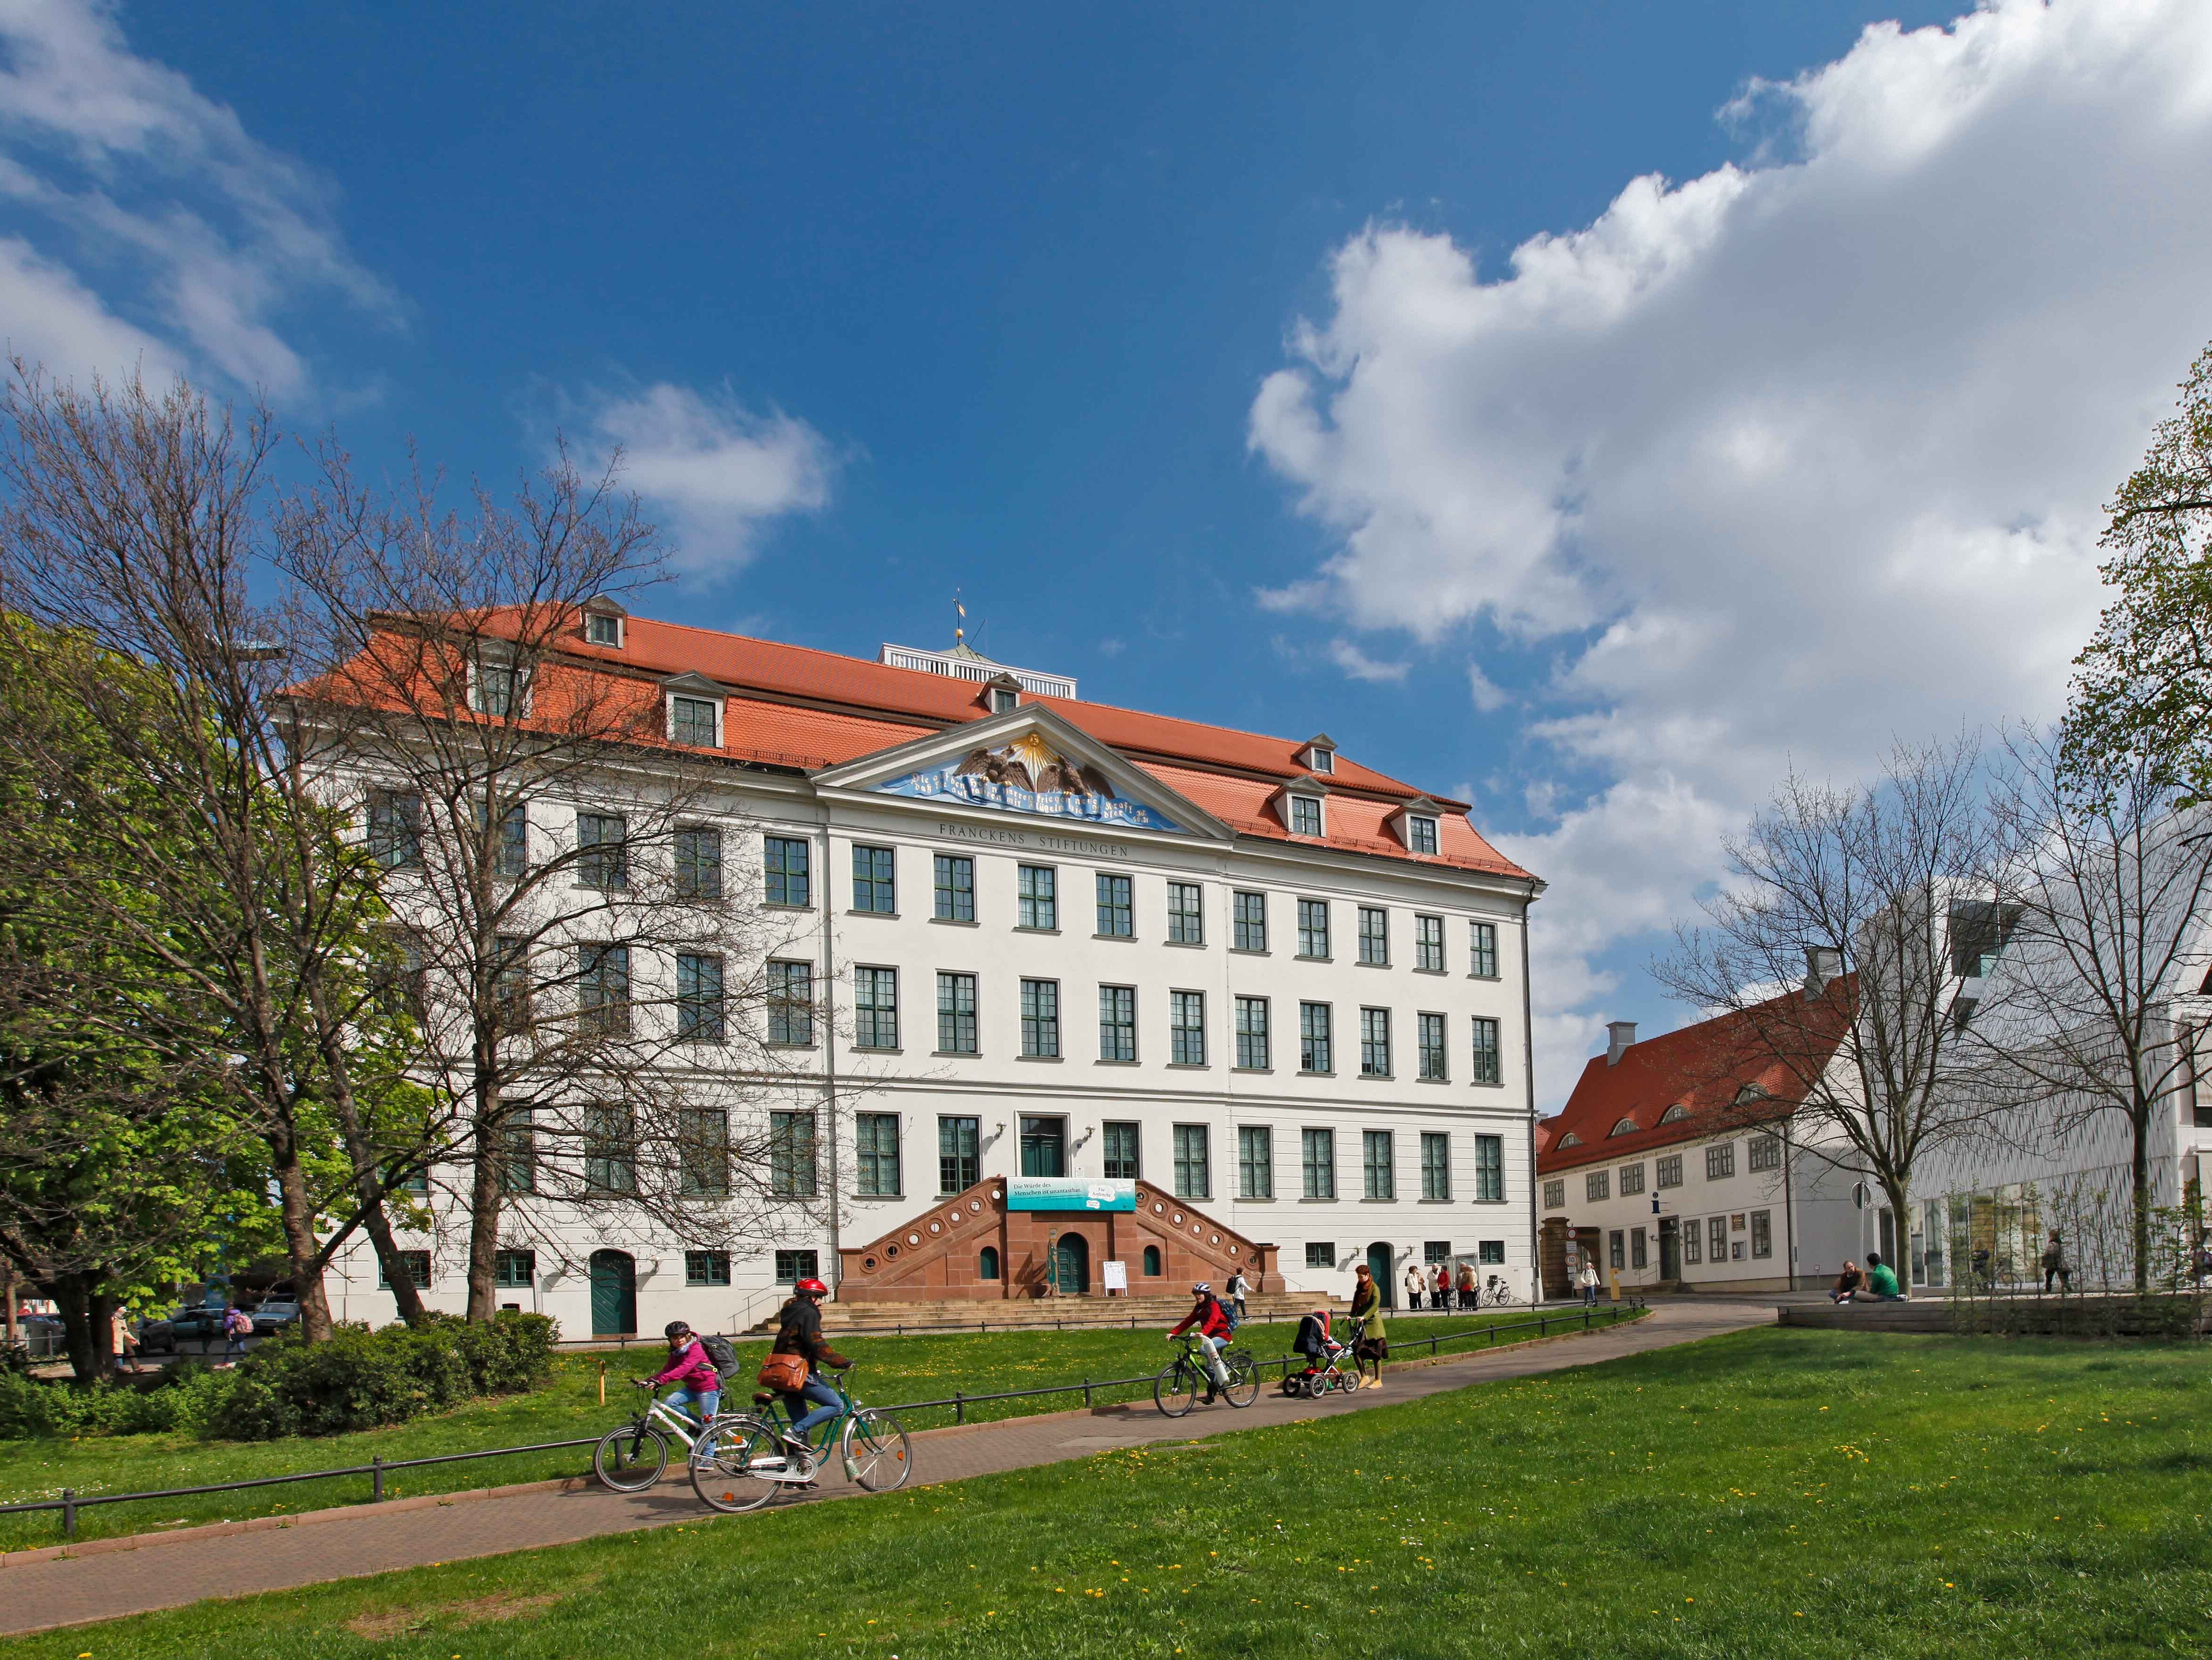 Ansicht des Gebäudeensembles Franckesche Stiftungen bei blauem Himmel